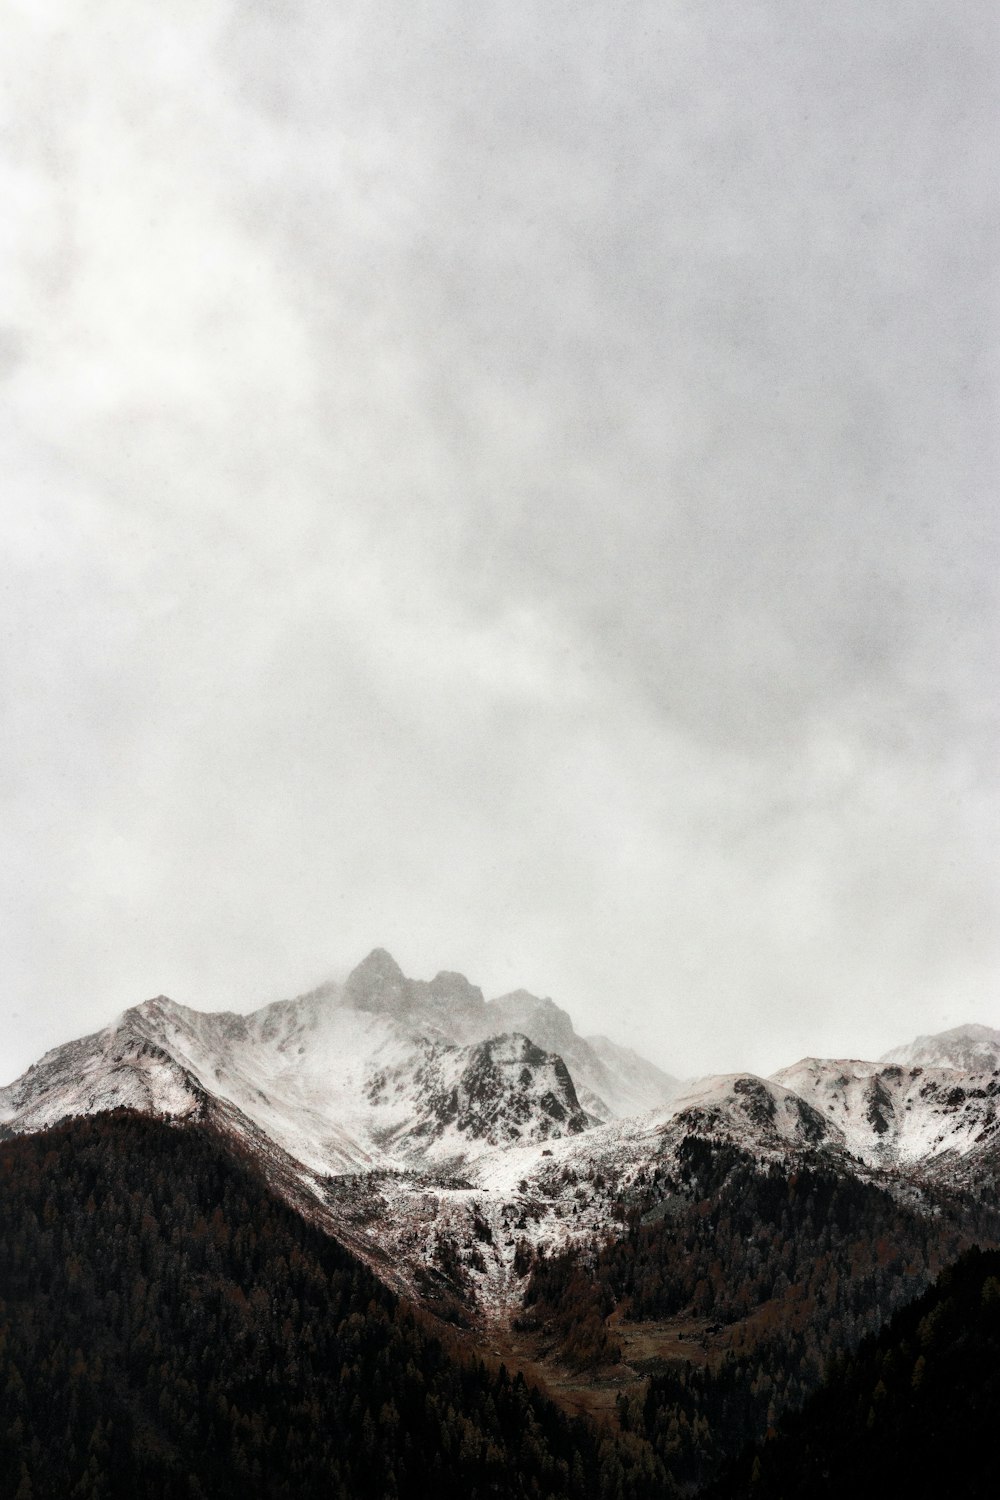 Iced Cap Mountain unter grauem Himmel beim Fotografieren bei Tag